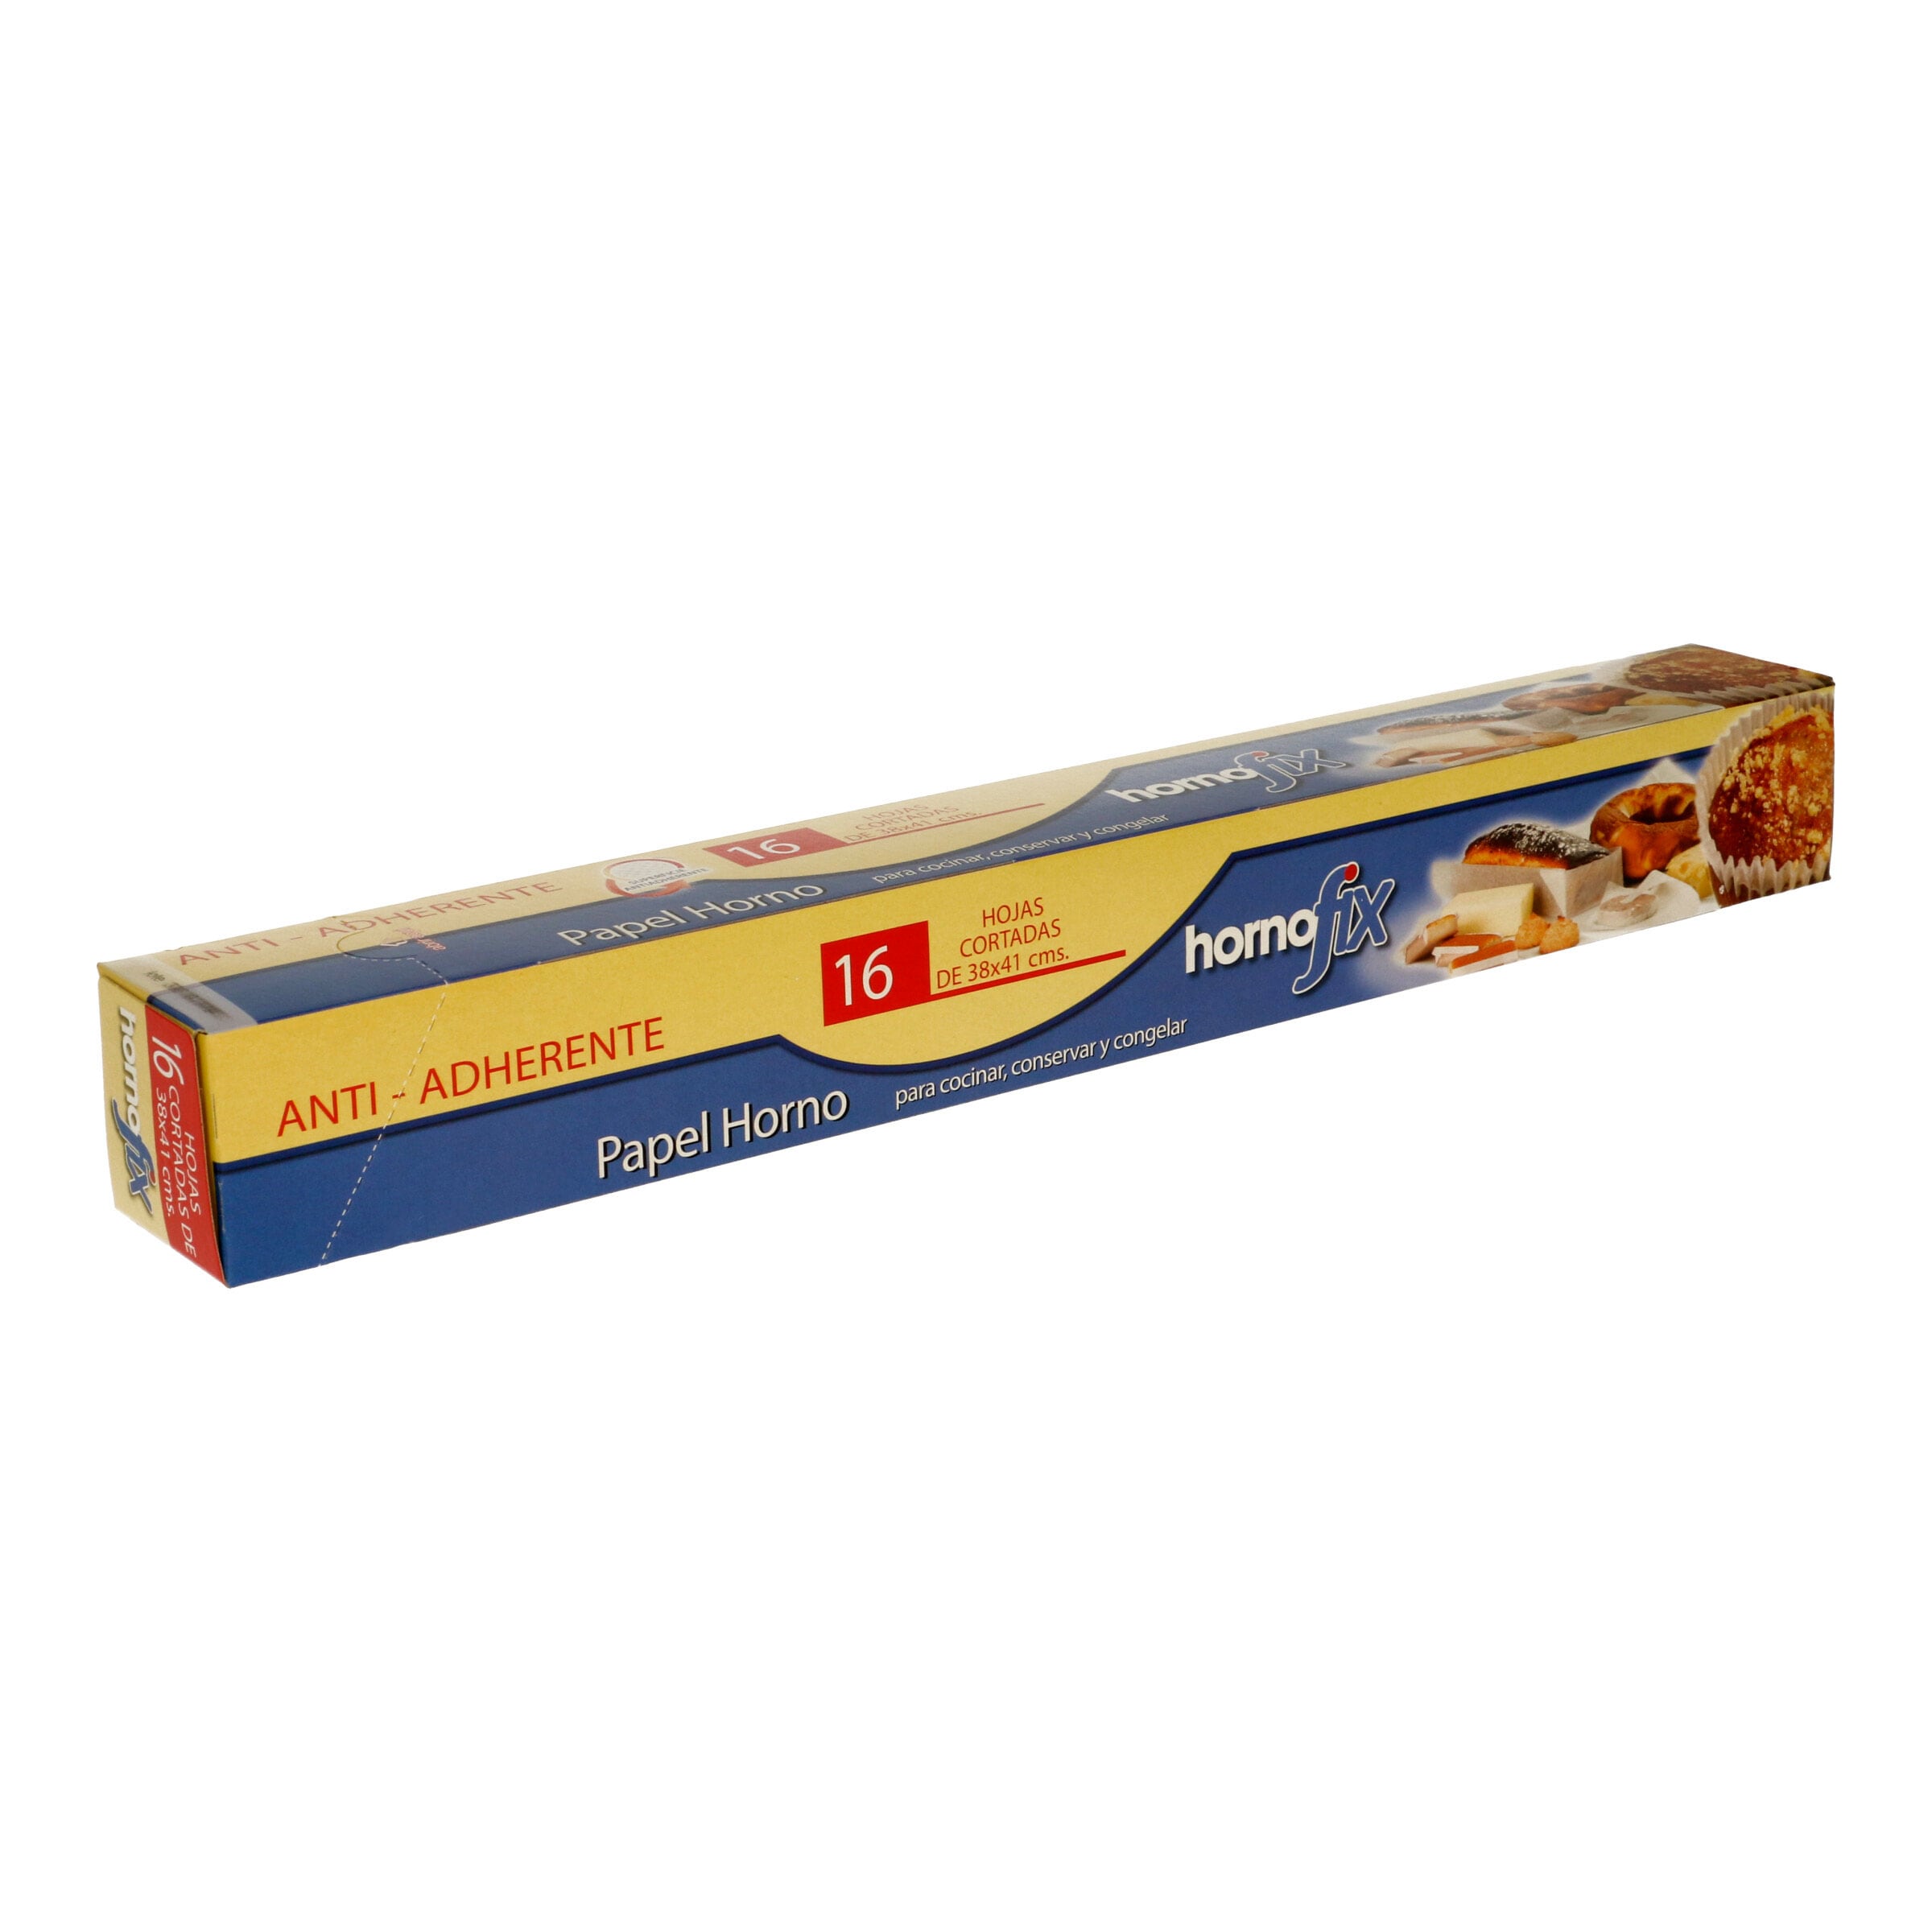 Papel de horno Hornofix caja 1 unidad - Supermercados DIA